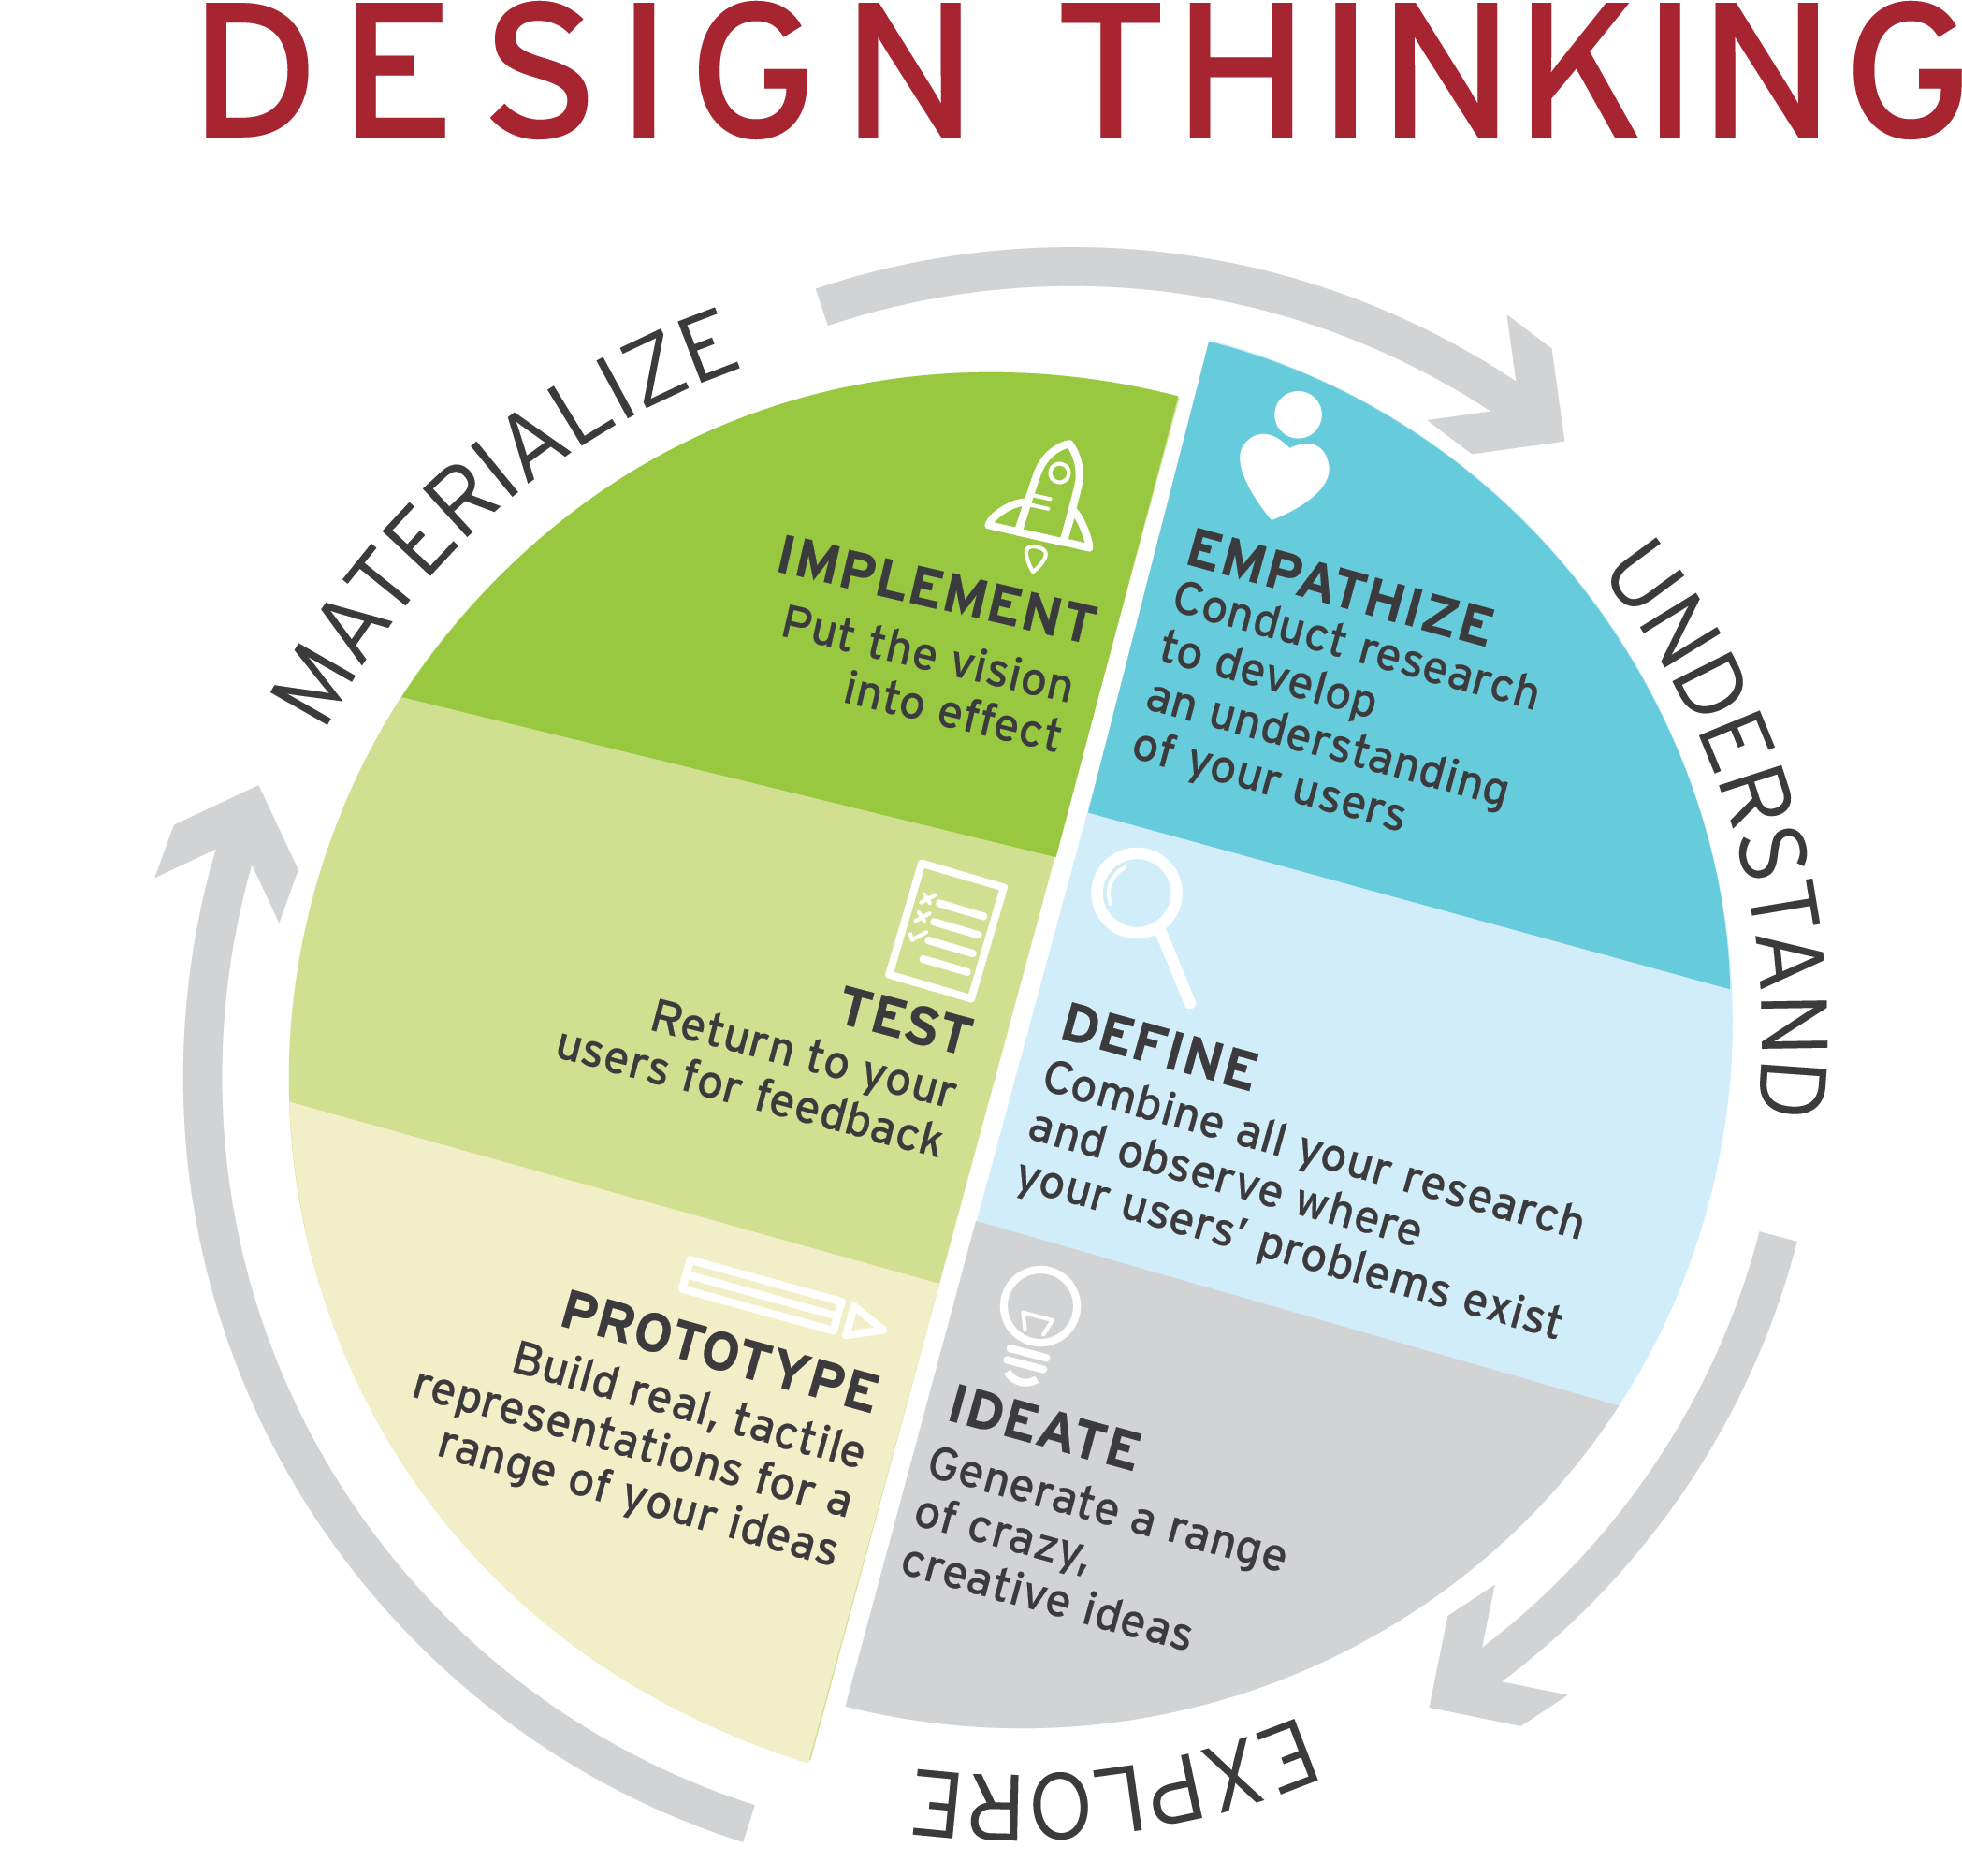 Creative Thinking Process Steps Image